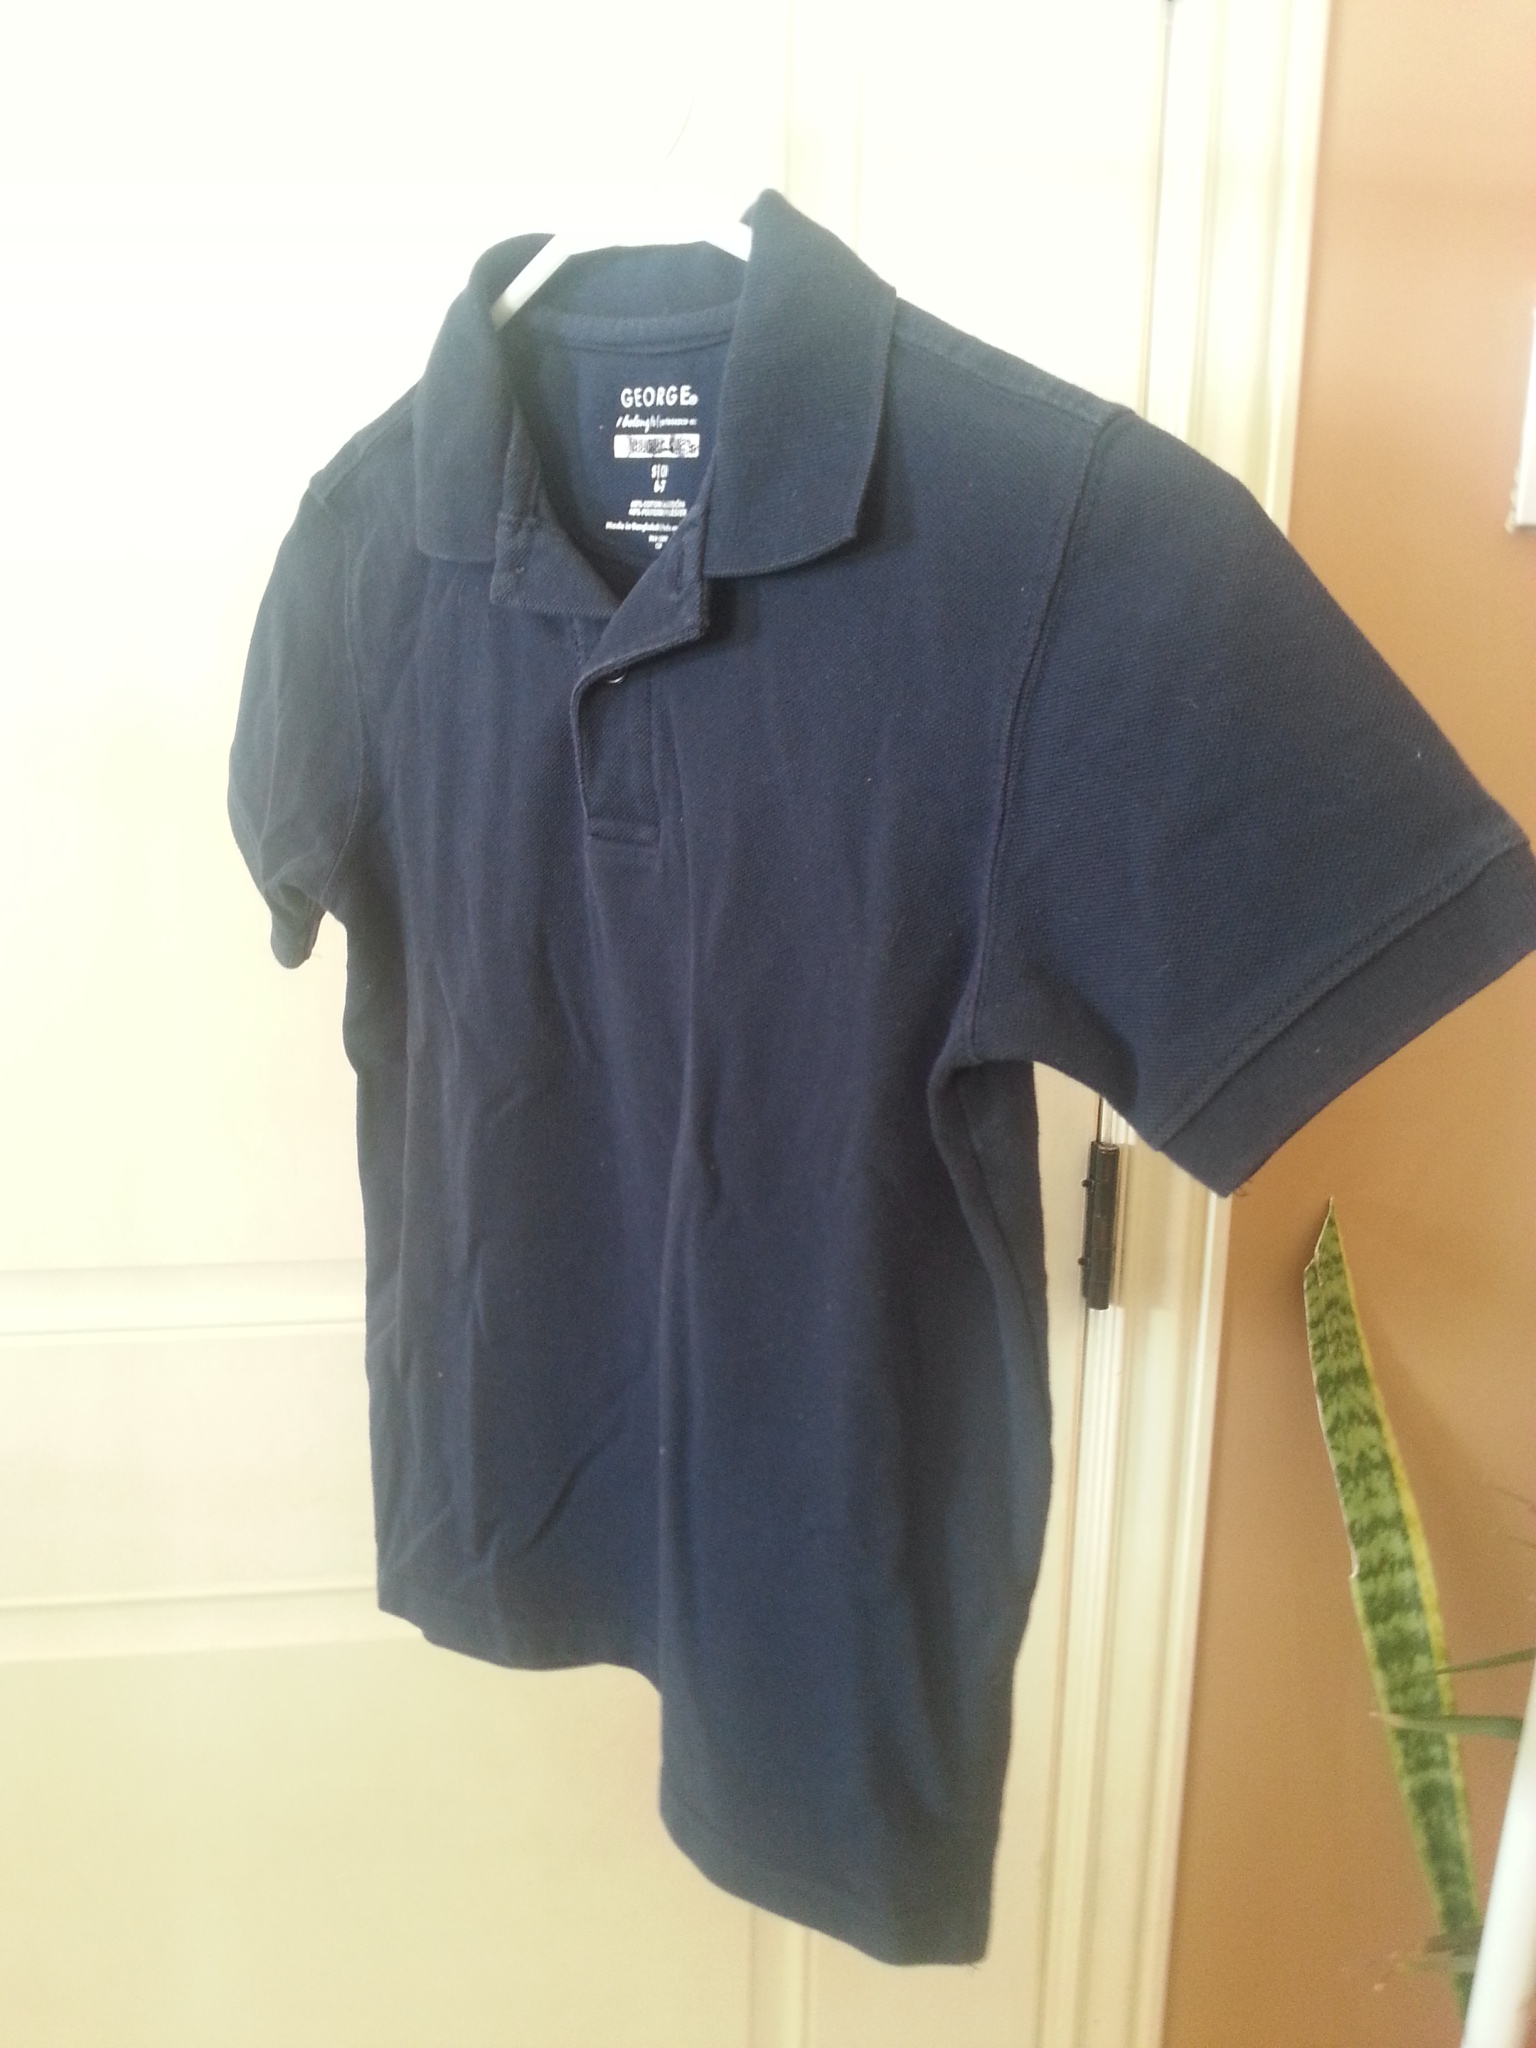 Nave blue short sleeve shirt \"George\" size sm 6-7